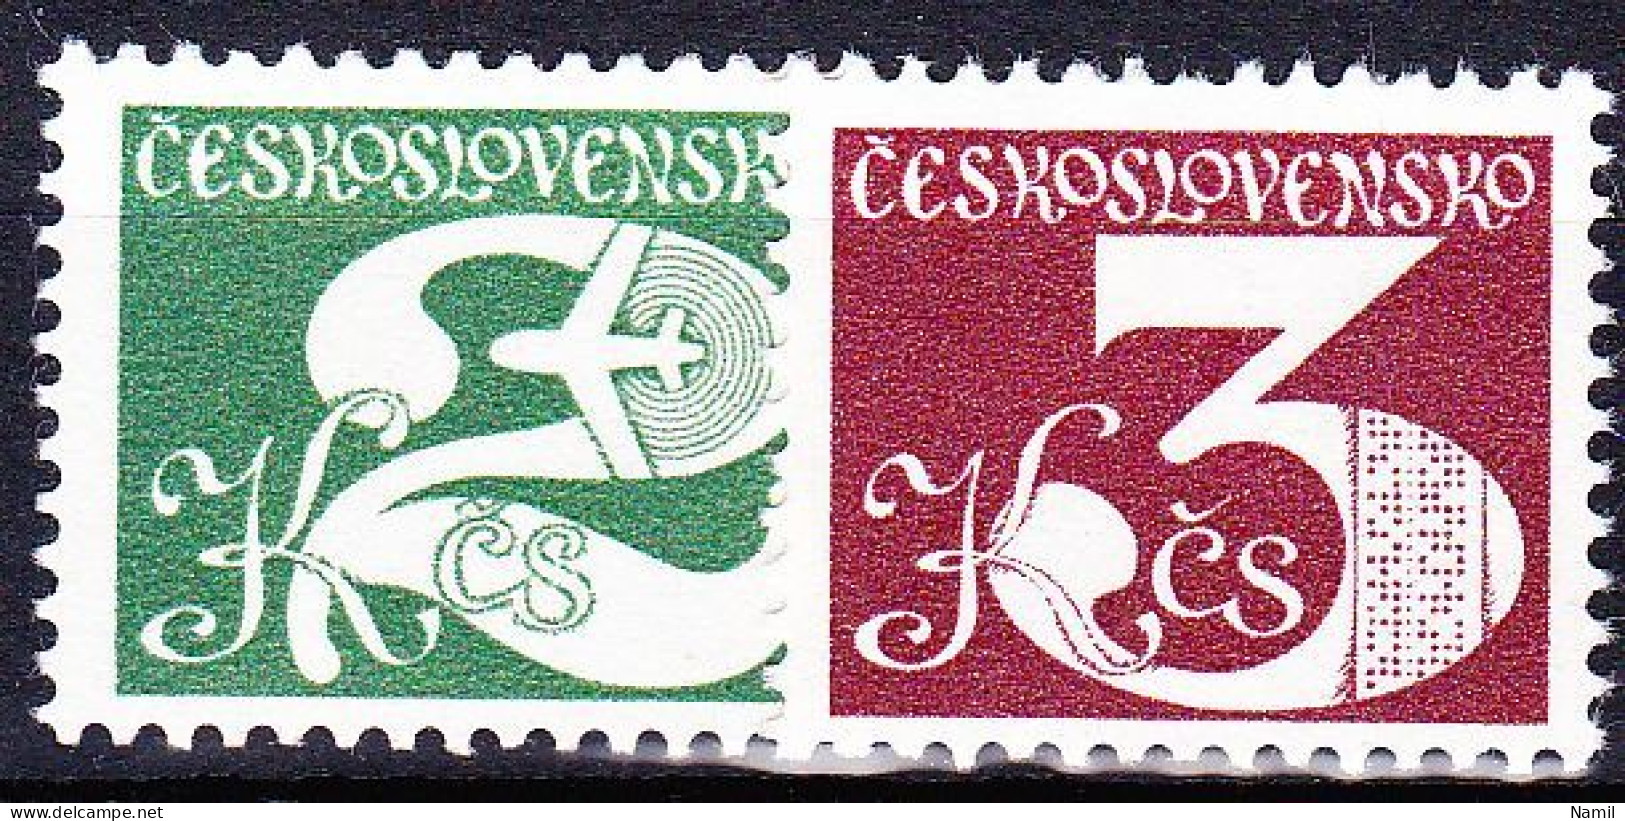 ** Tchécoslovaquie 1980 Mi 2542-3 (Yv 2378-9), (MNH)** - Unused Stamps